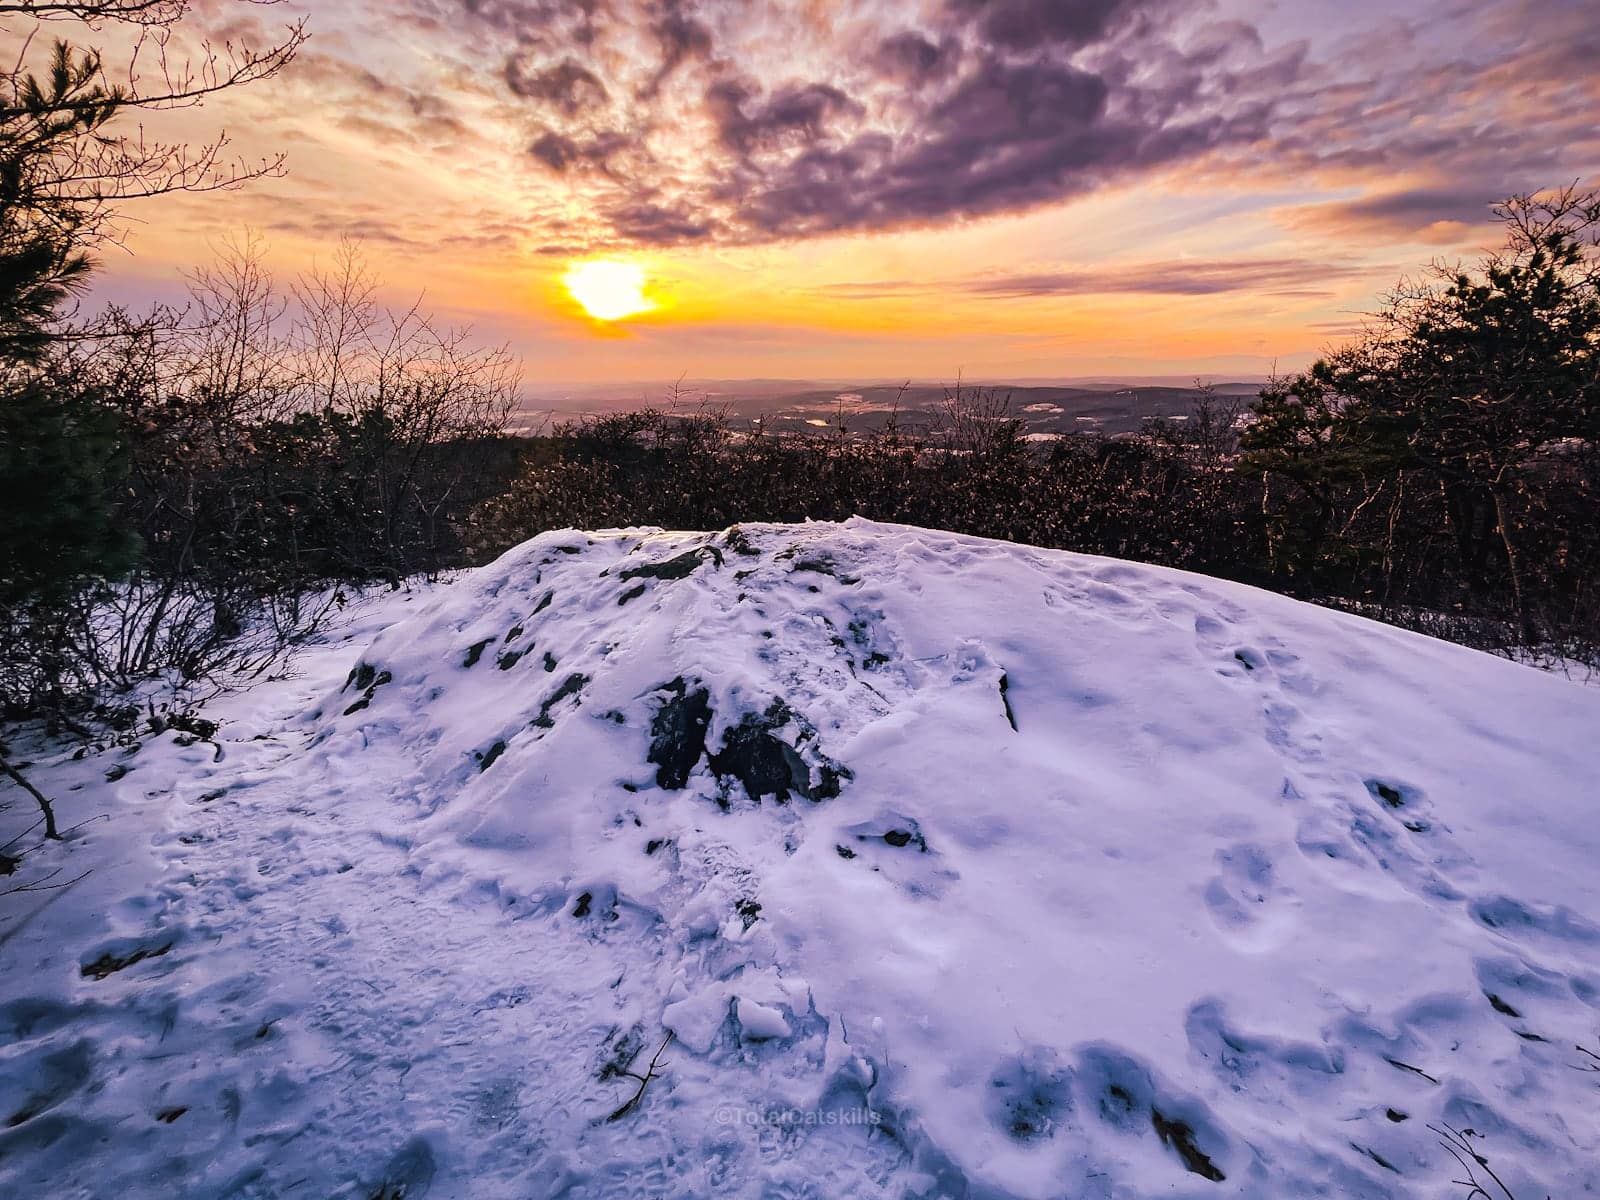 Sunset Rock in winter, snow